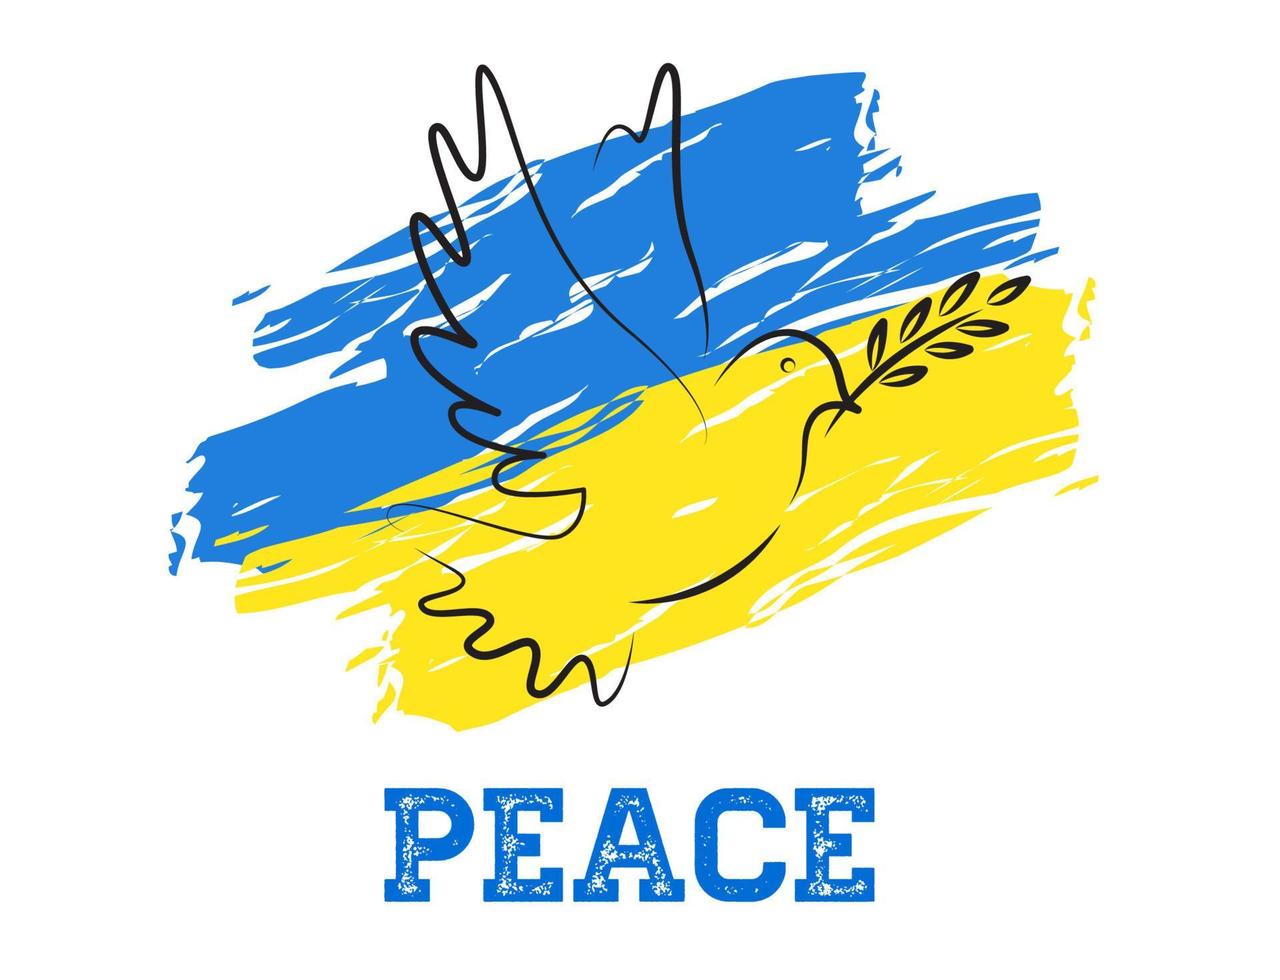 Stop War, peace, pigeon sign, ray for Ukraine, Ukraine flag concept vector illustration